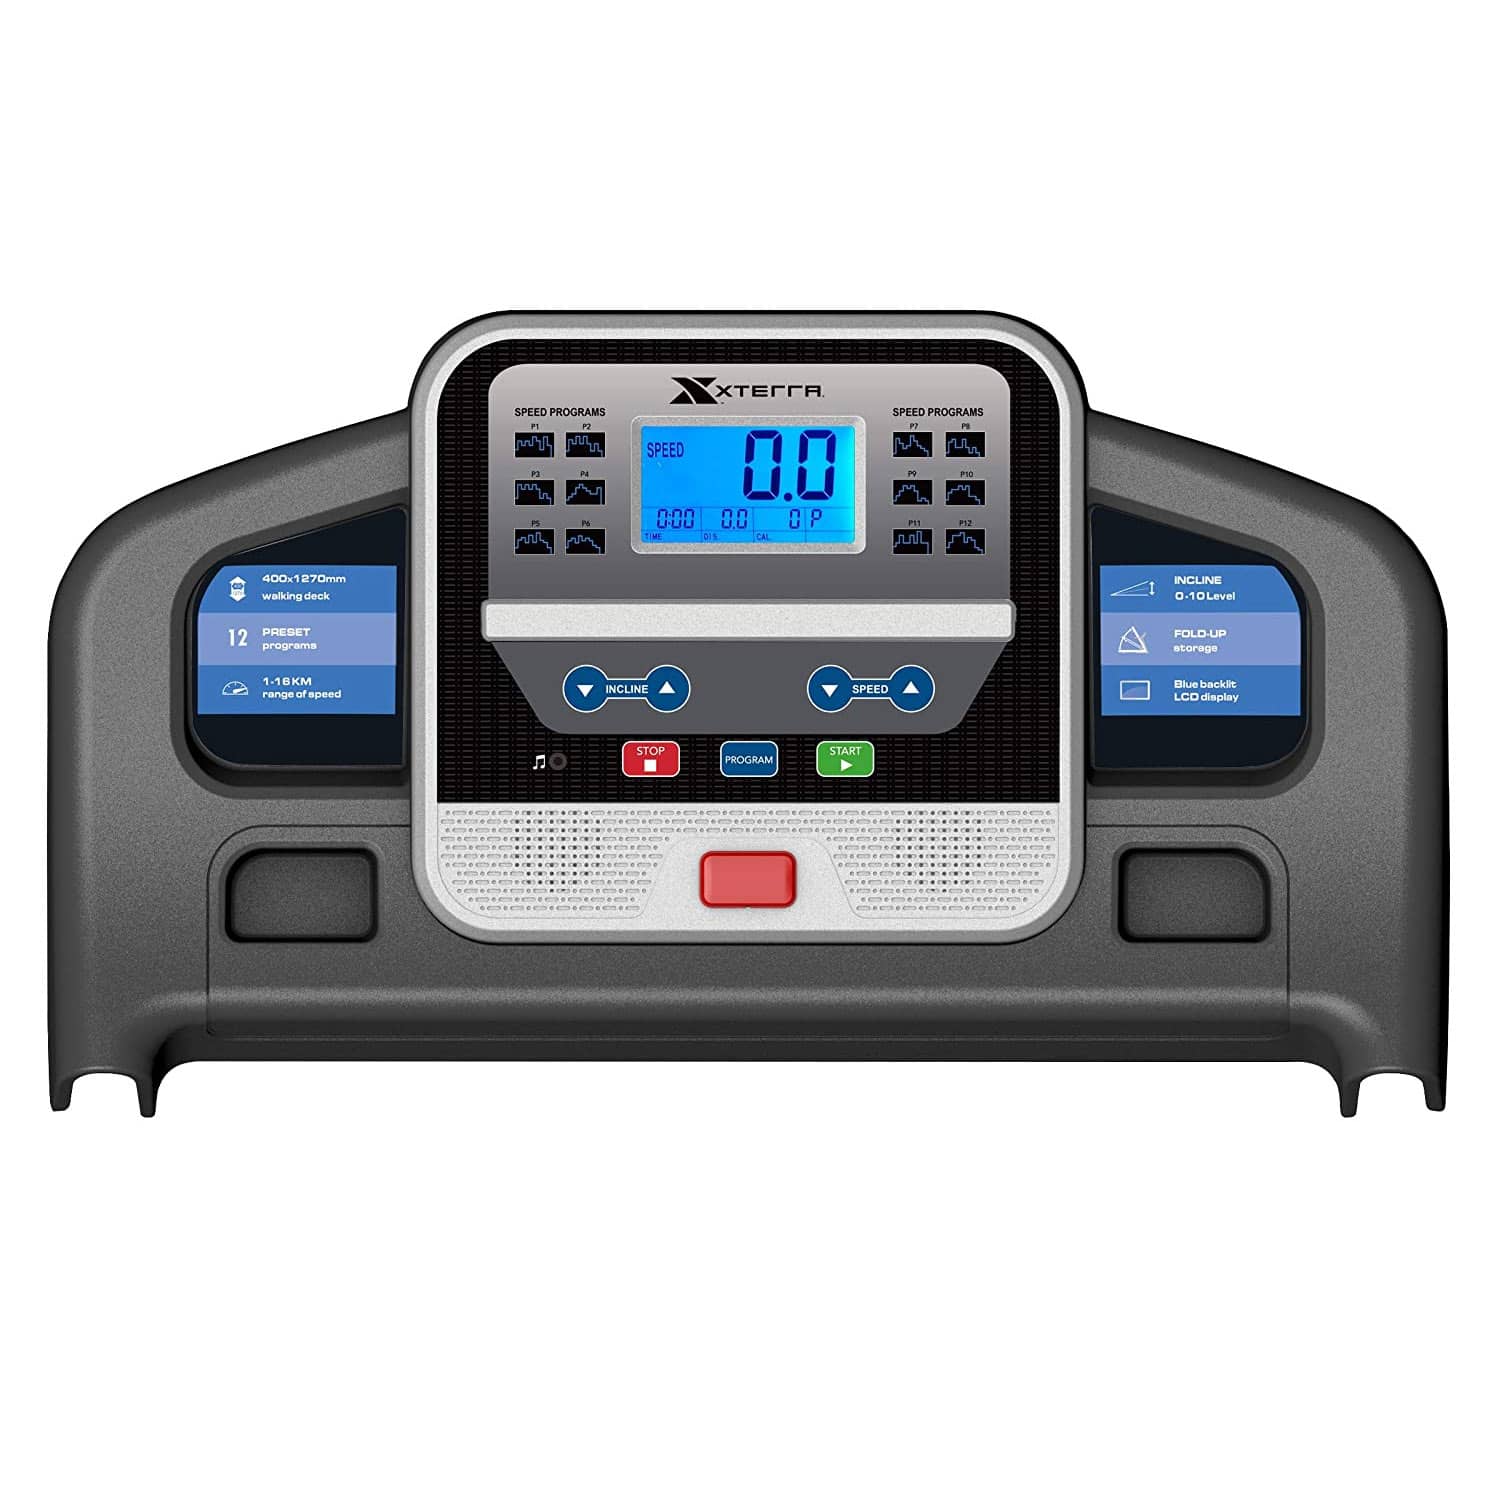 ARGT XTERRA Fitness TR 220 Home Treadmill